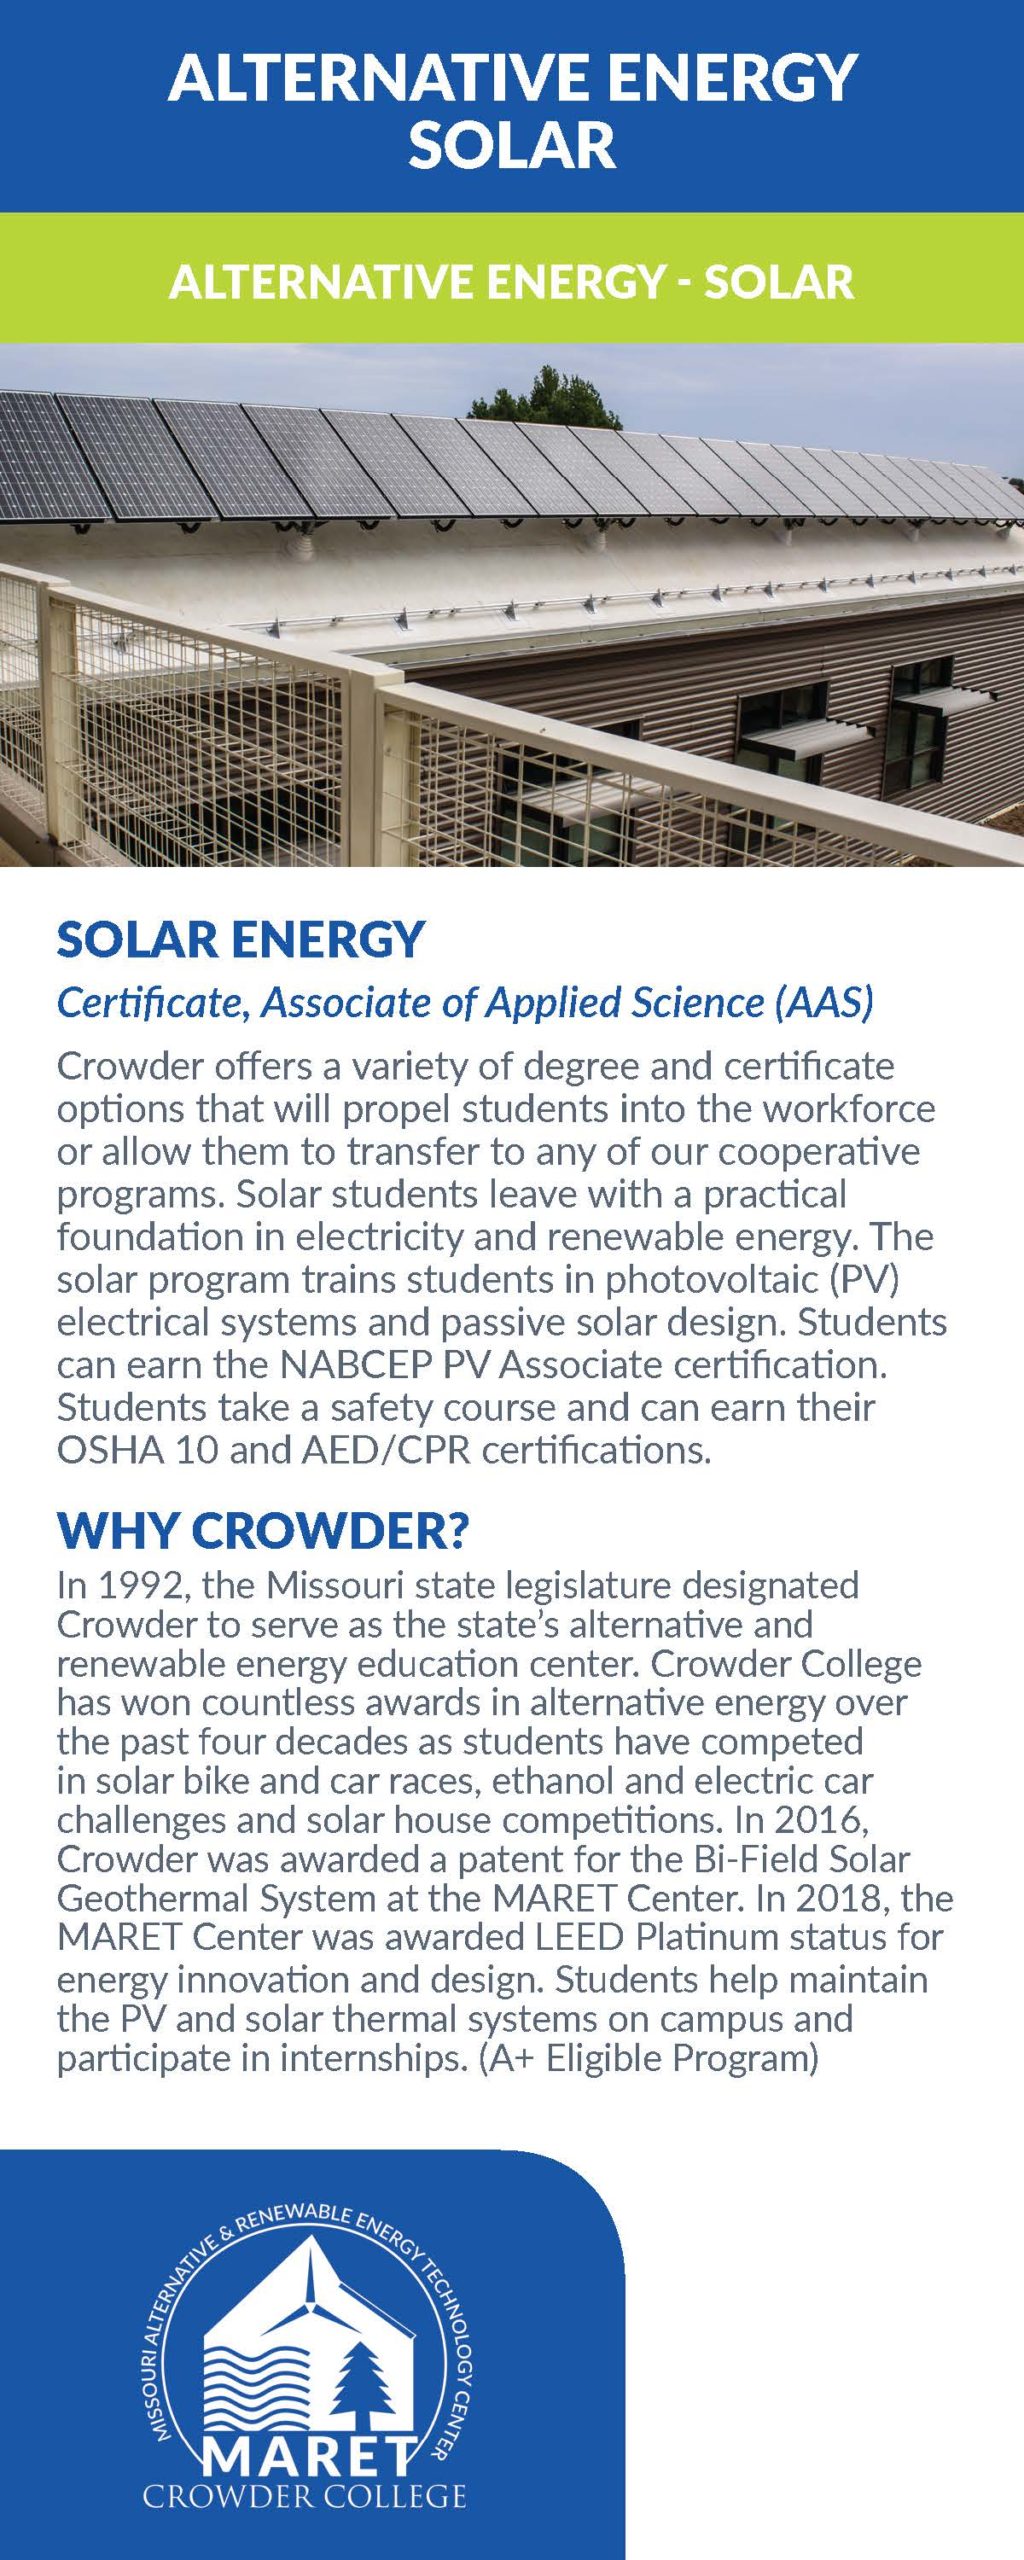 Solar Energy program at Crowder College